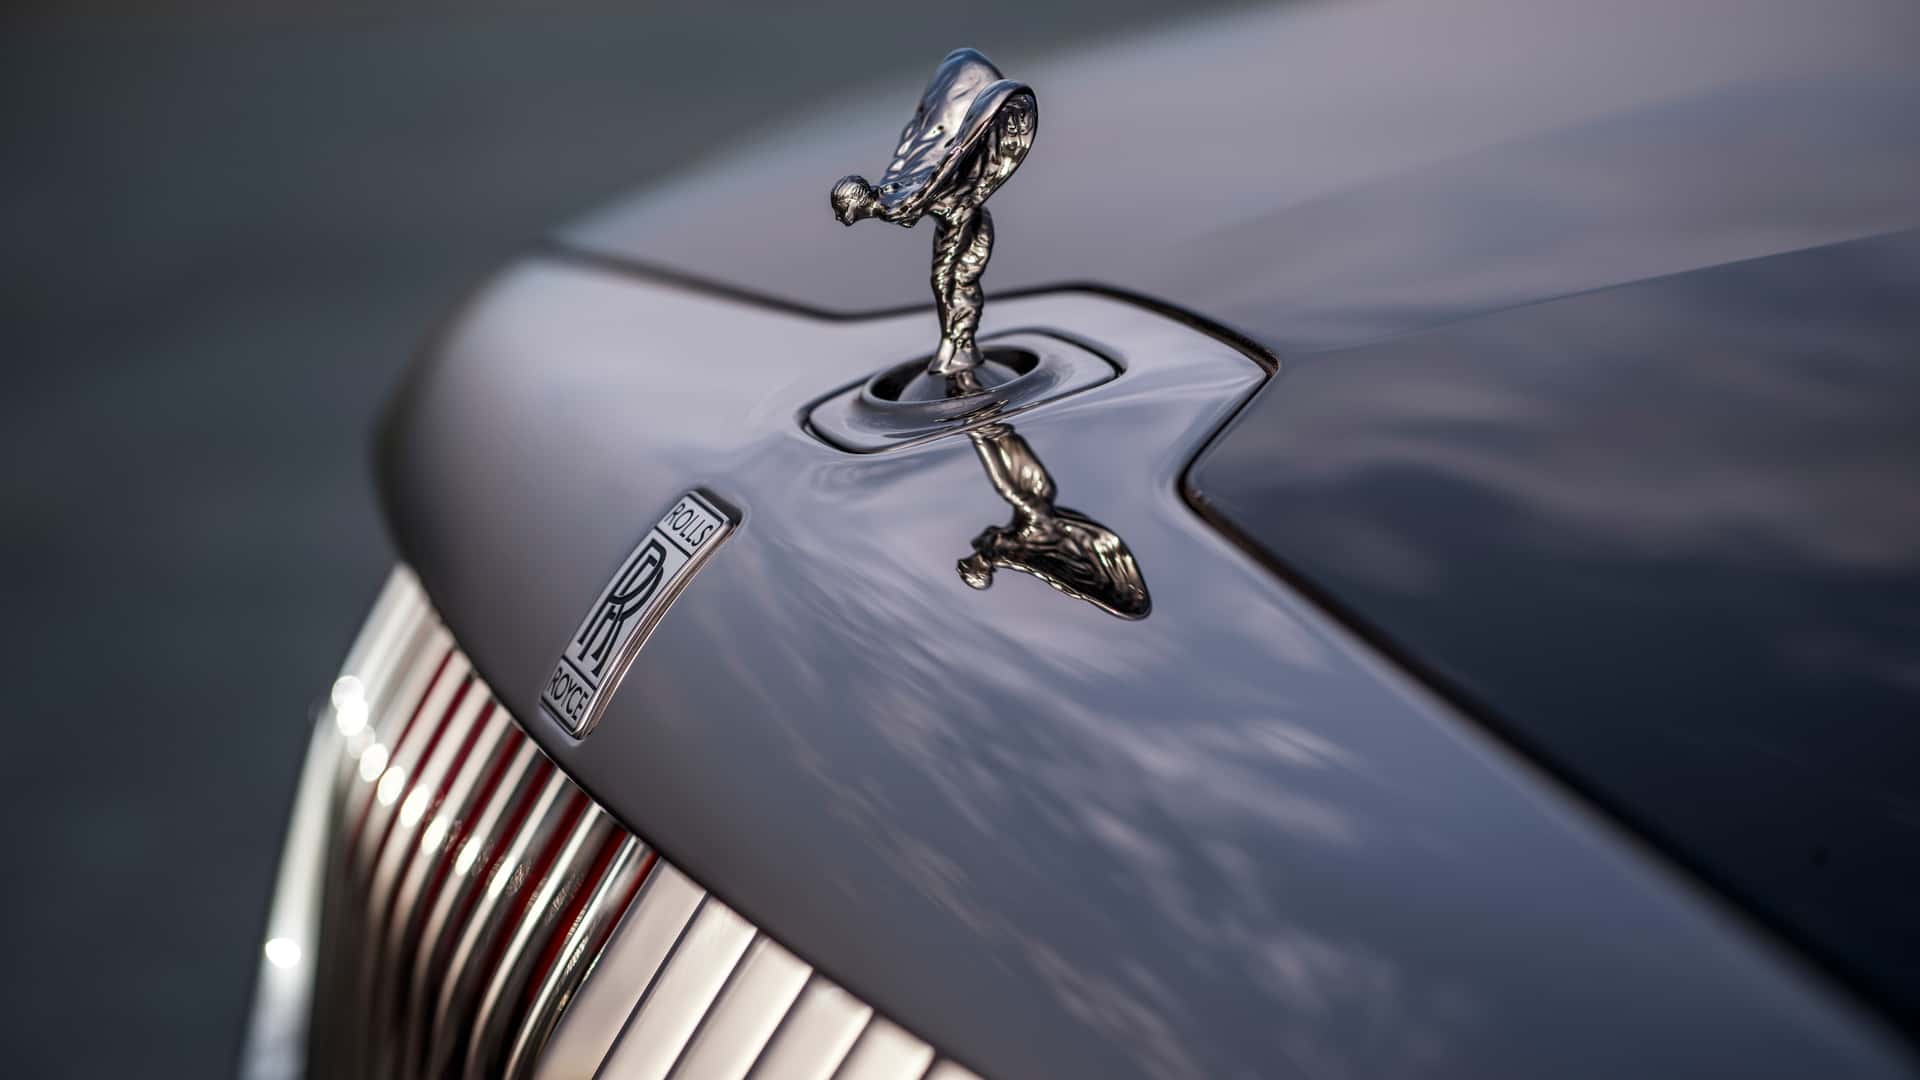 H ιστορία της παραγγελίας της Rolls-Royce των 30 εκατ. ευρώ – Βάφτηκε 150 φορές για να “πετύχει” το χρώμα